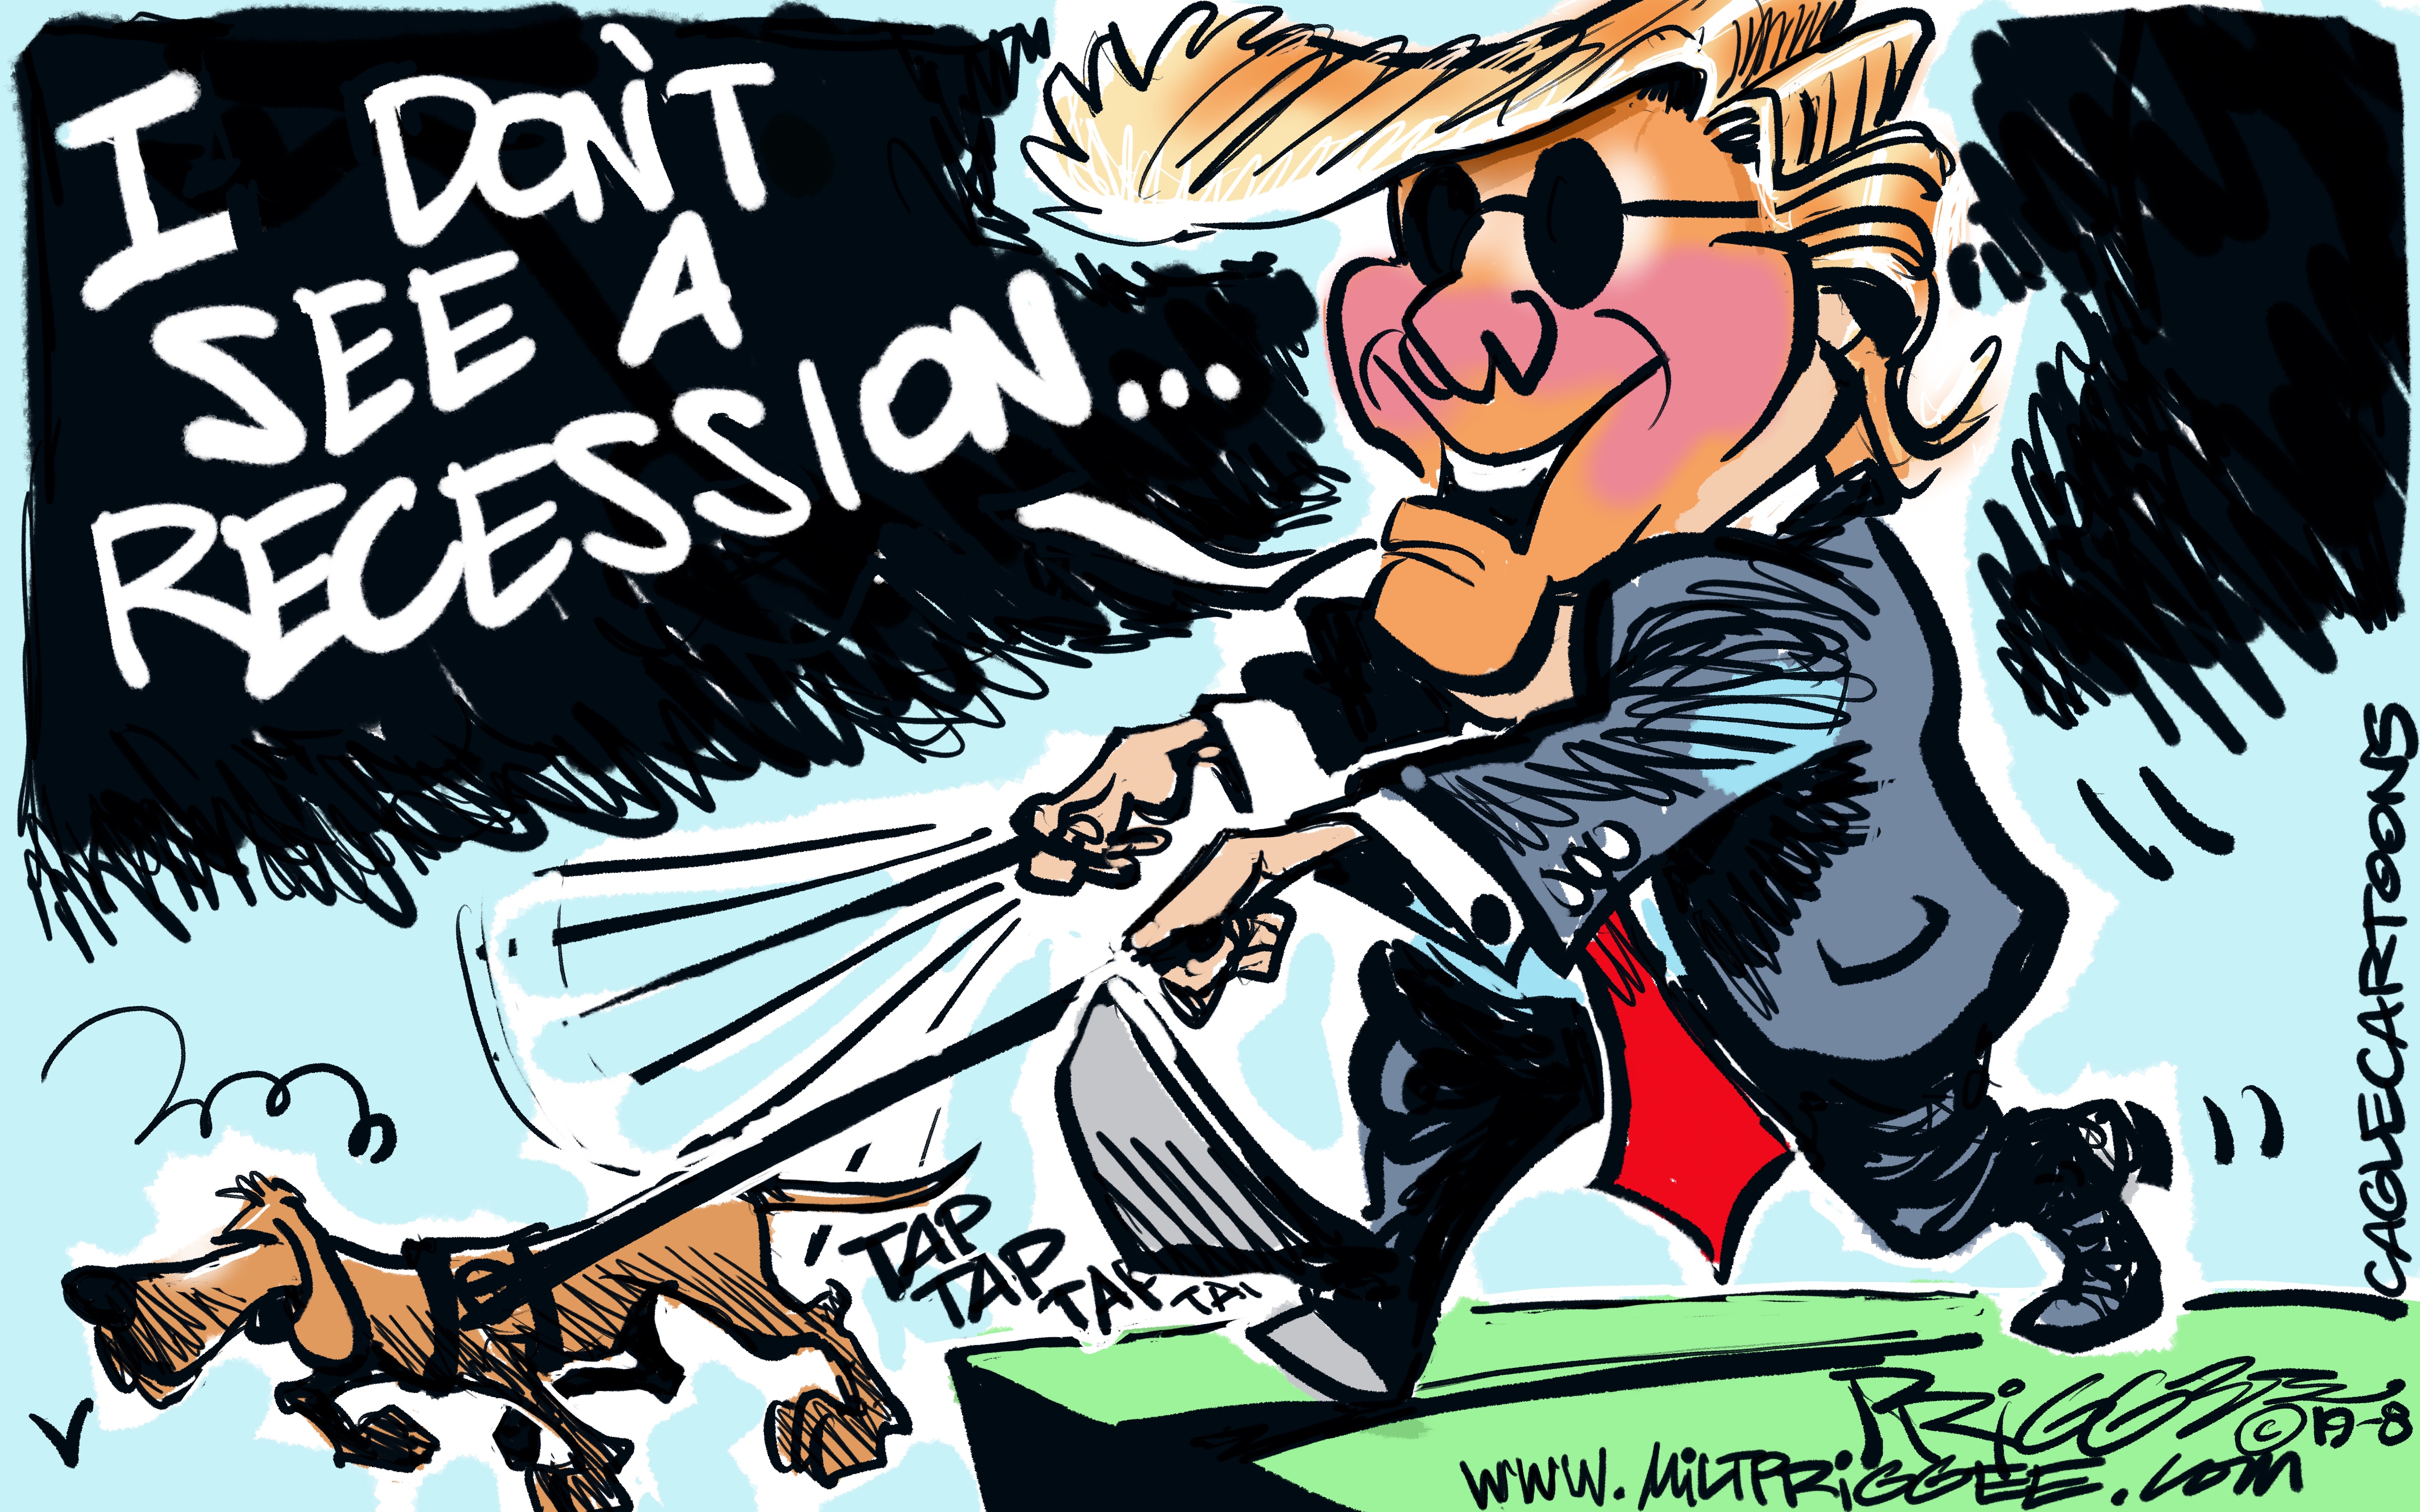 Political Cartoon . Trump Blind Man Service Dog Don't See A Recession